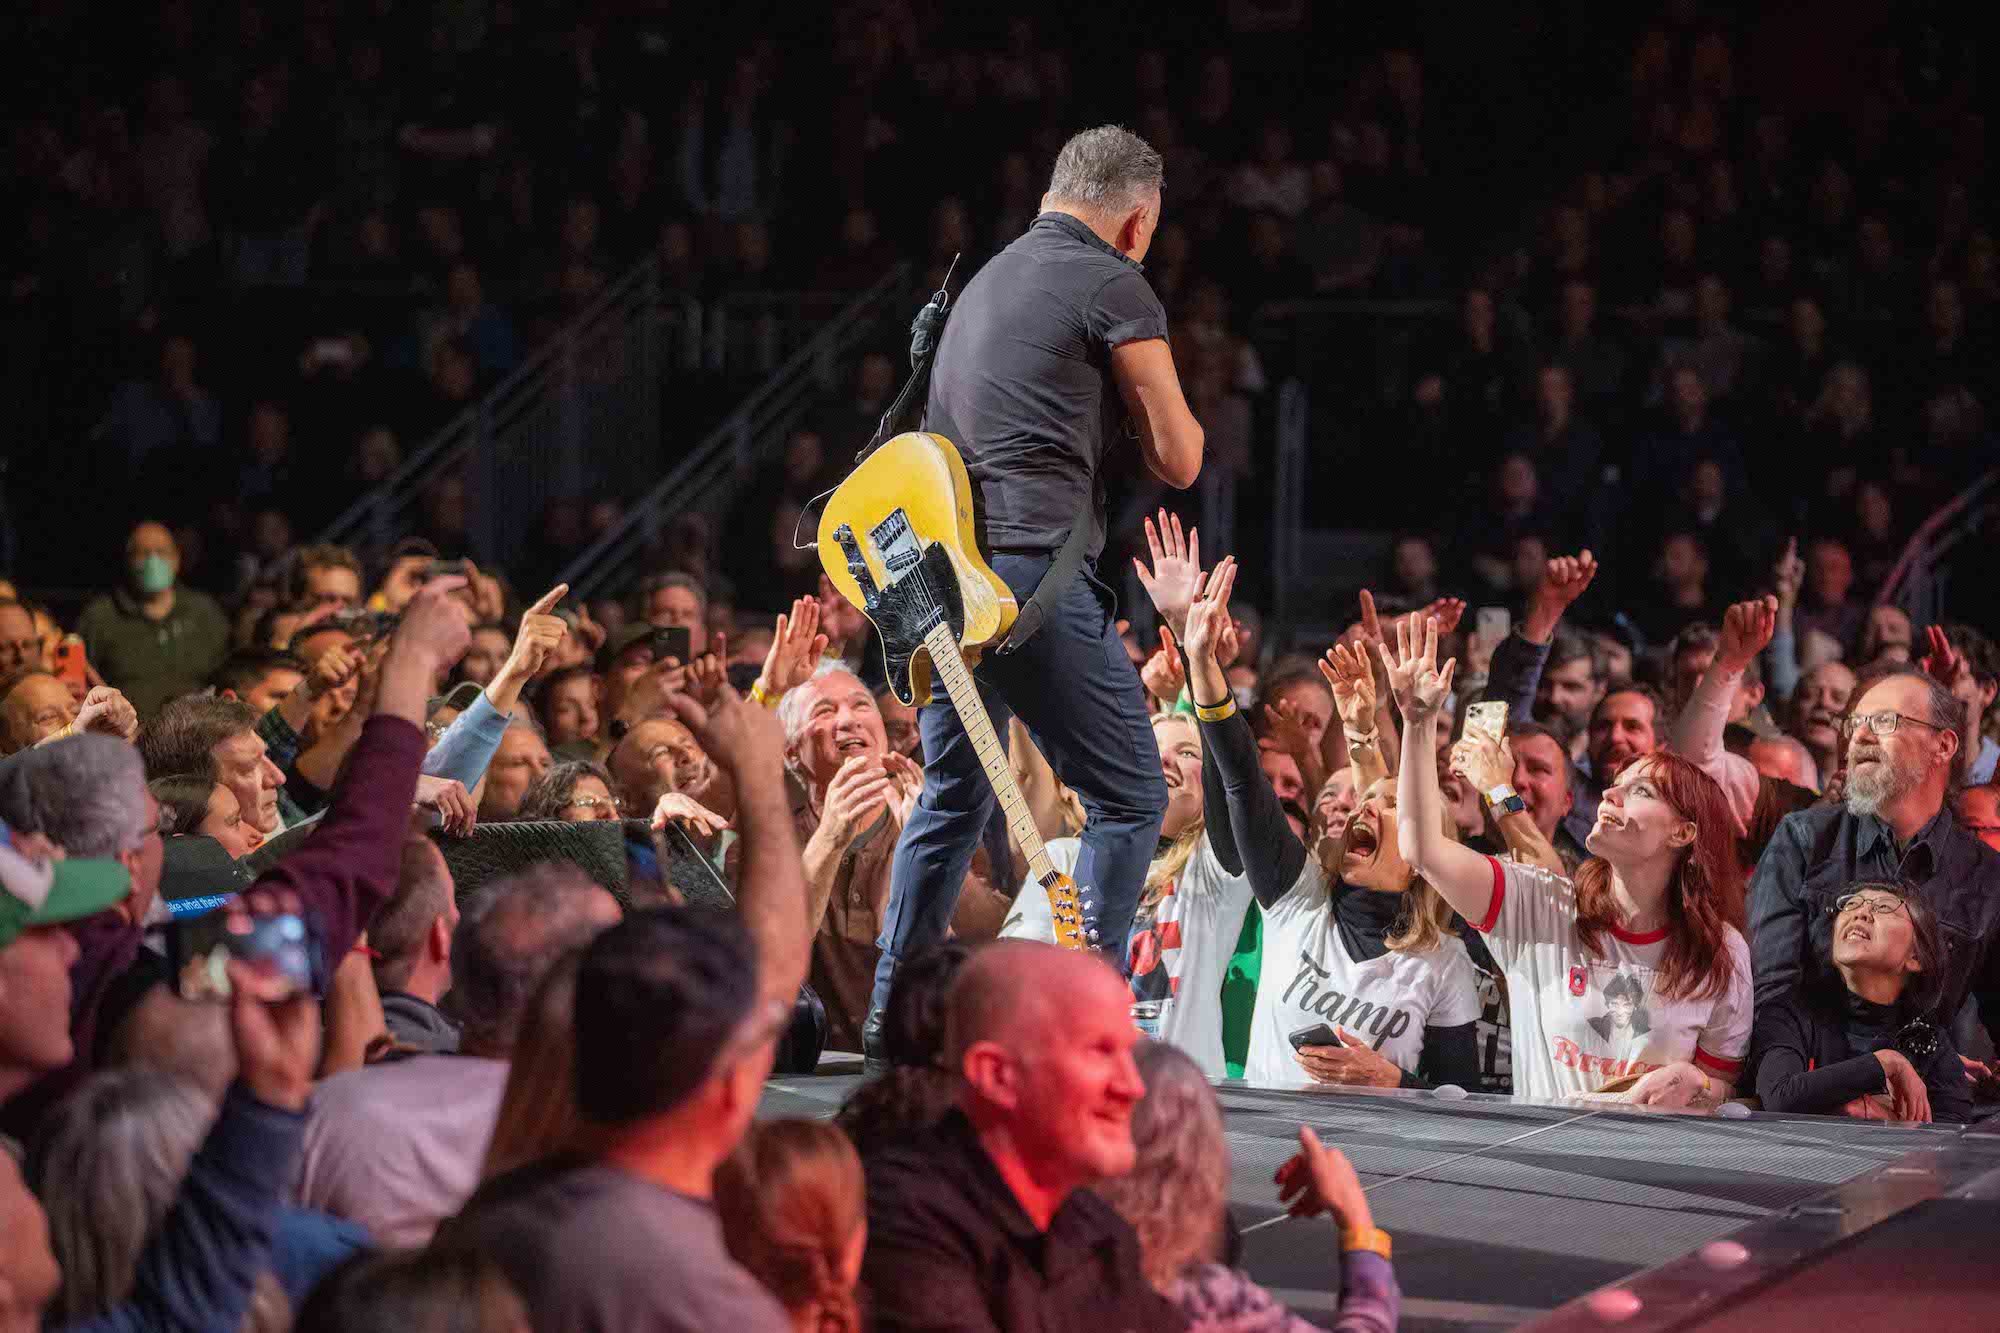 Bruce Springsteen & E Street Band at Climate Pledge Arena, Seattle, Washington on February 27, 2023.